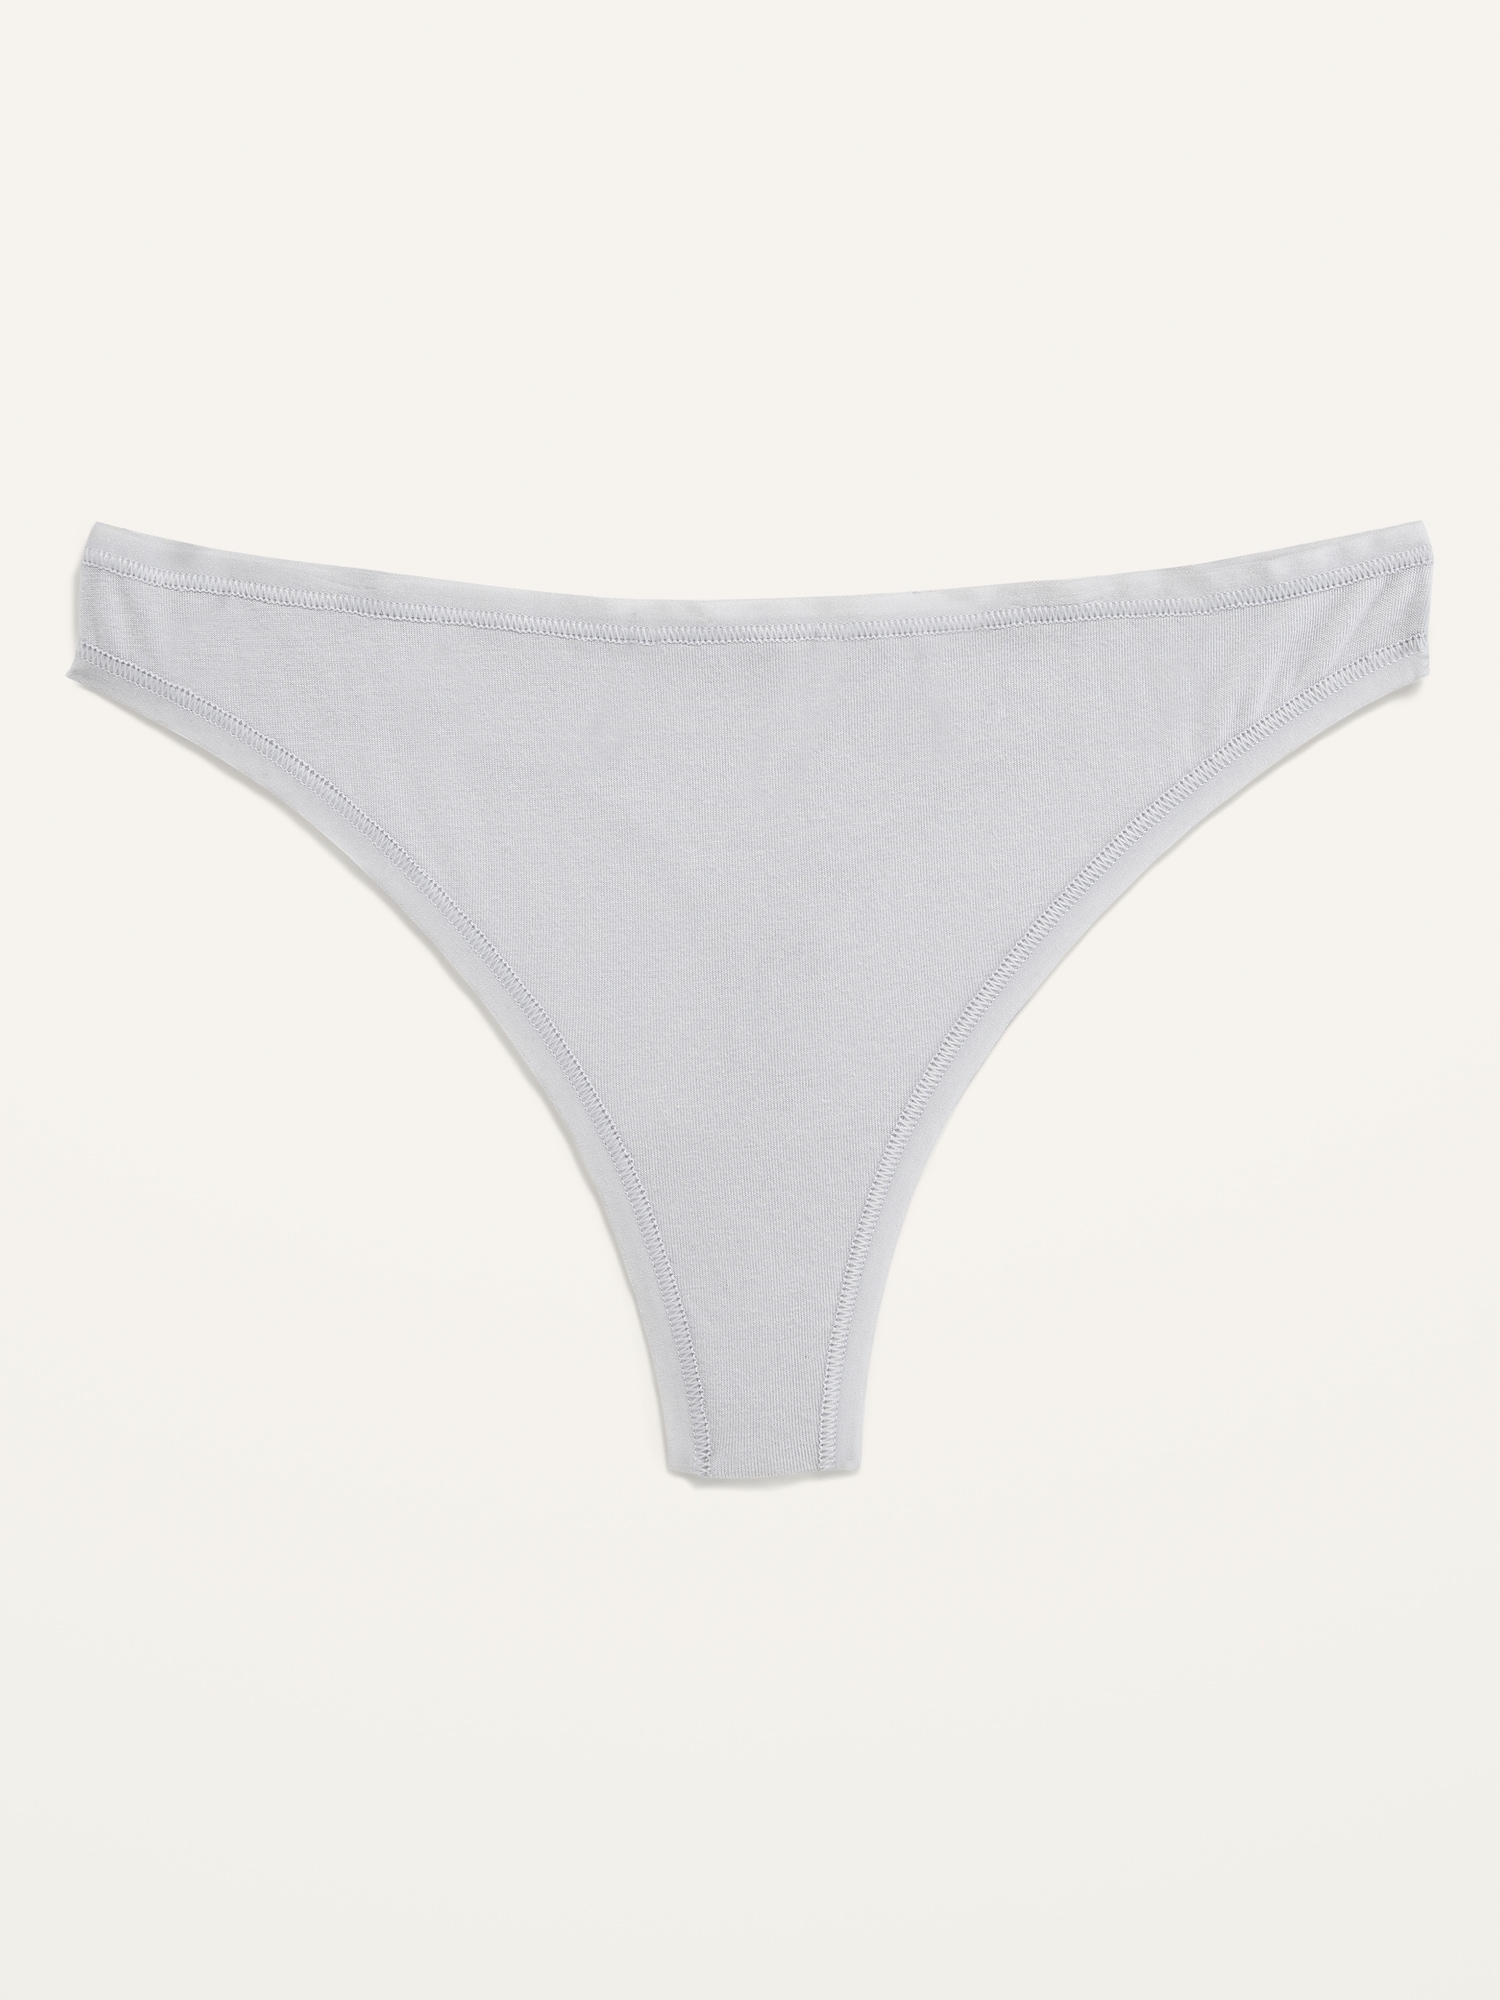 Jersey Thong Underwear for Women